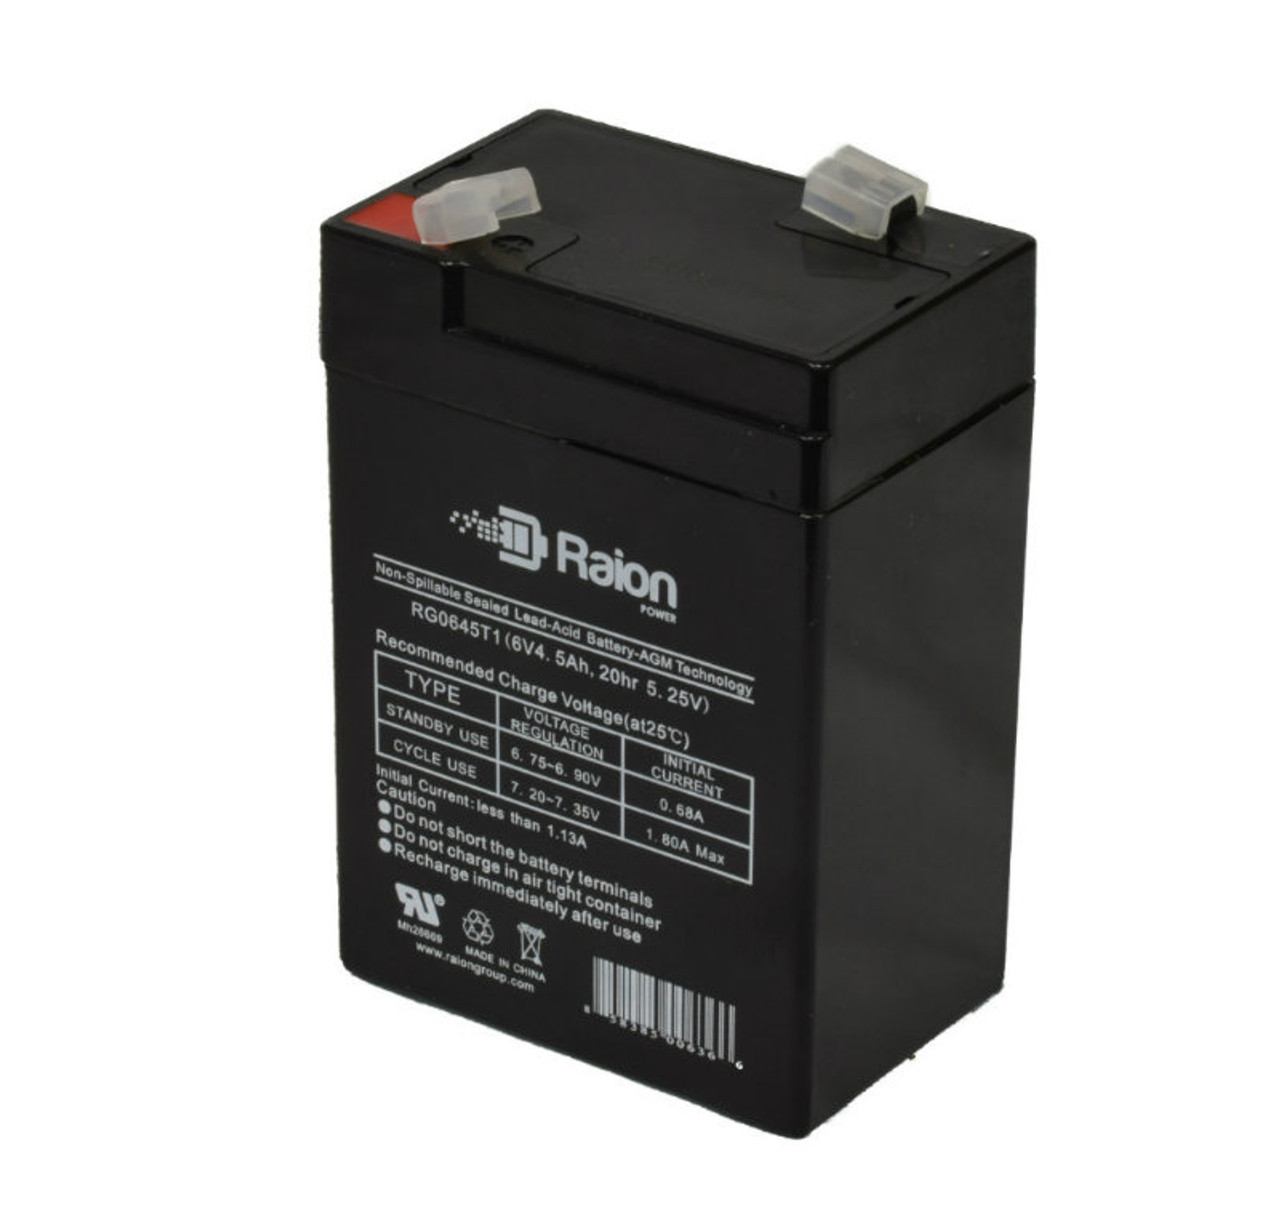 Raion Power RG0645T1 6V 4.5Ah Replacement Battery Cartridge for Yuntong YT-645